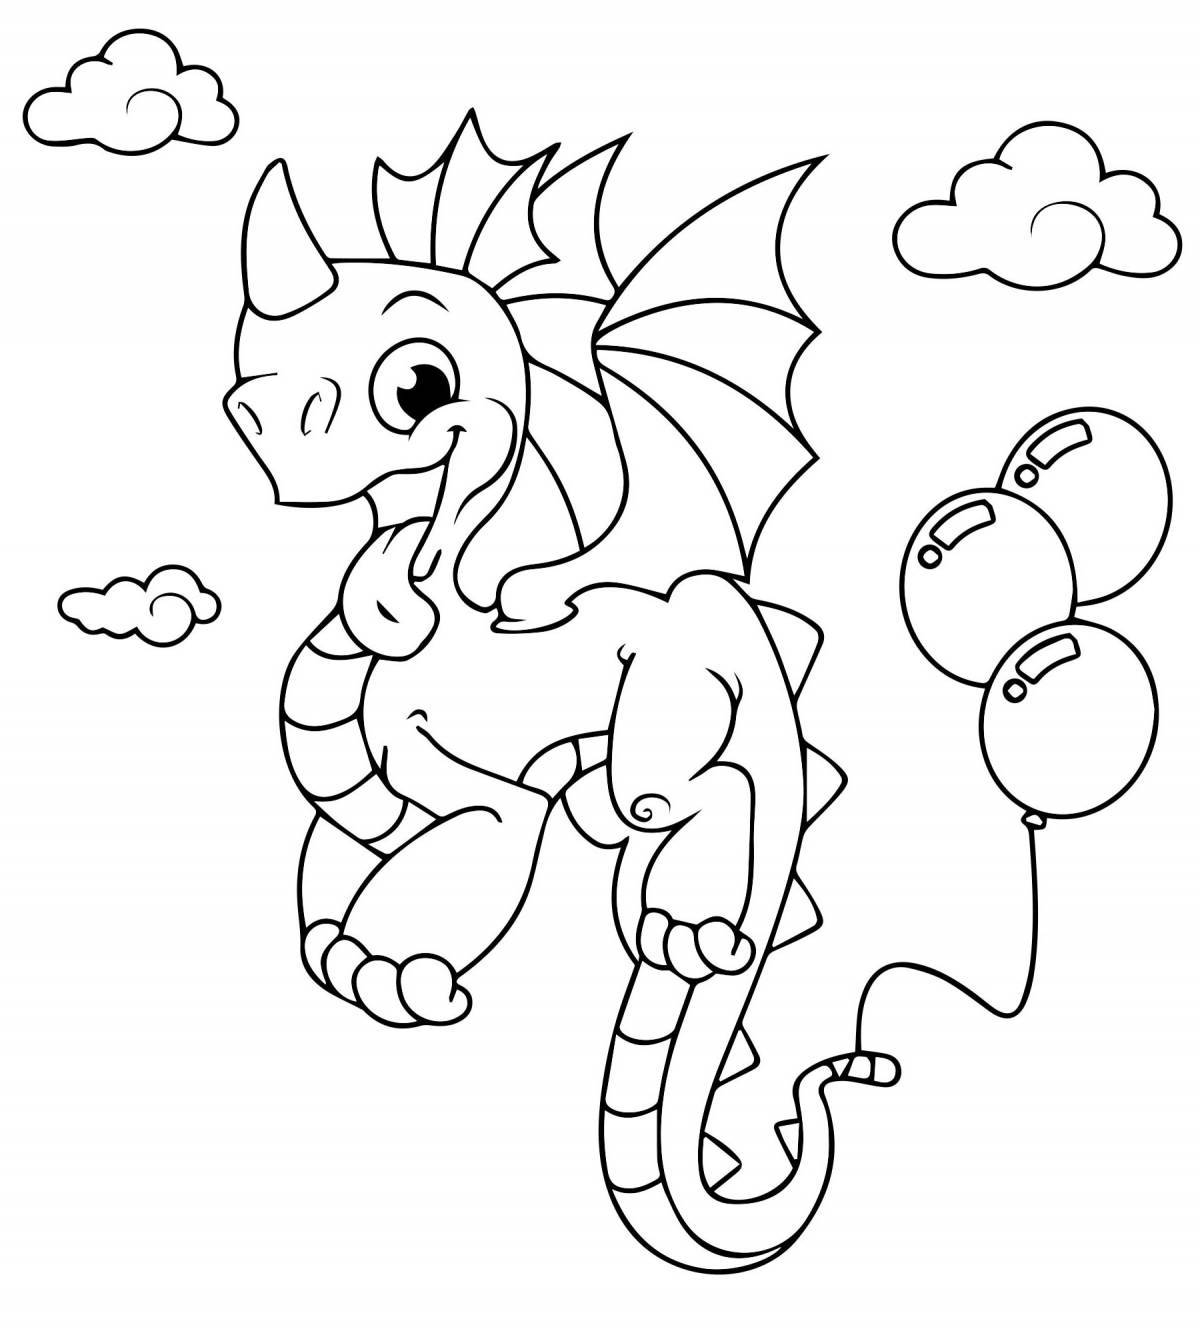 Wonderful dragon coloring book for kids